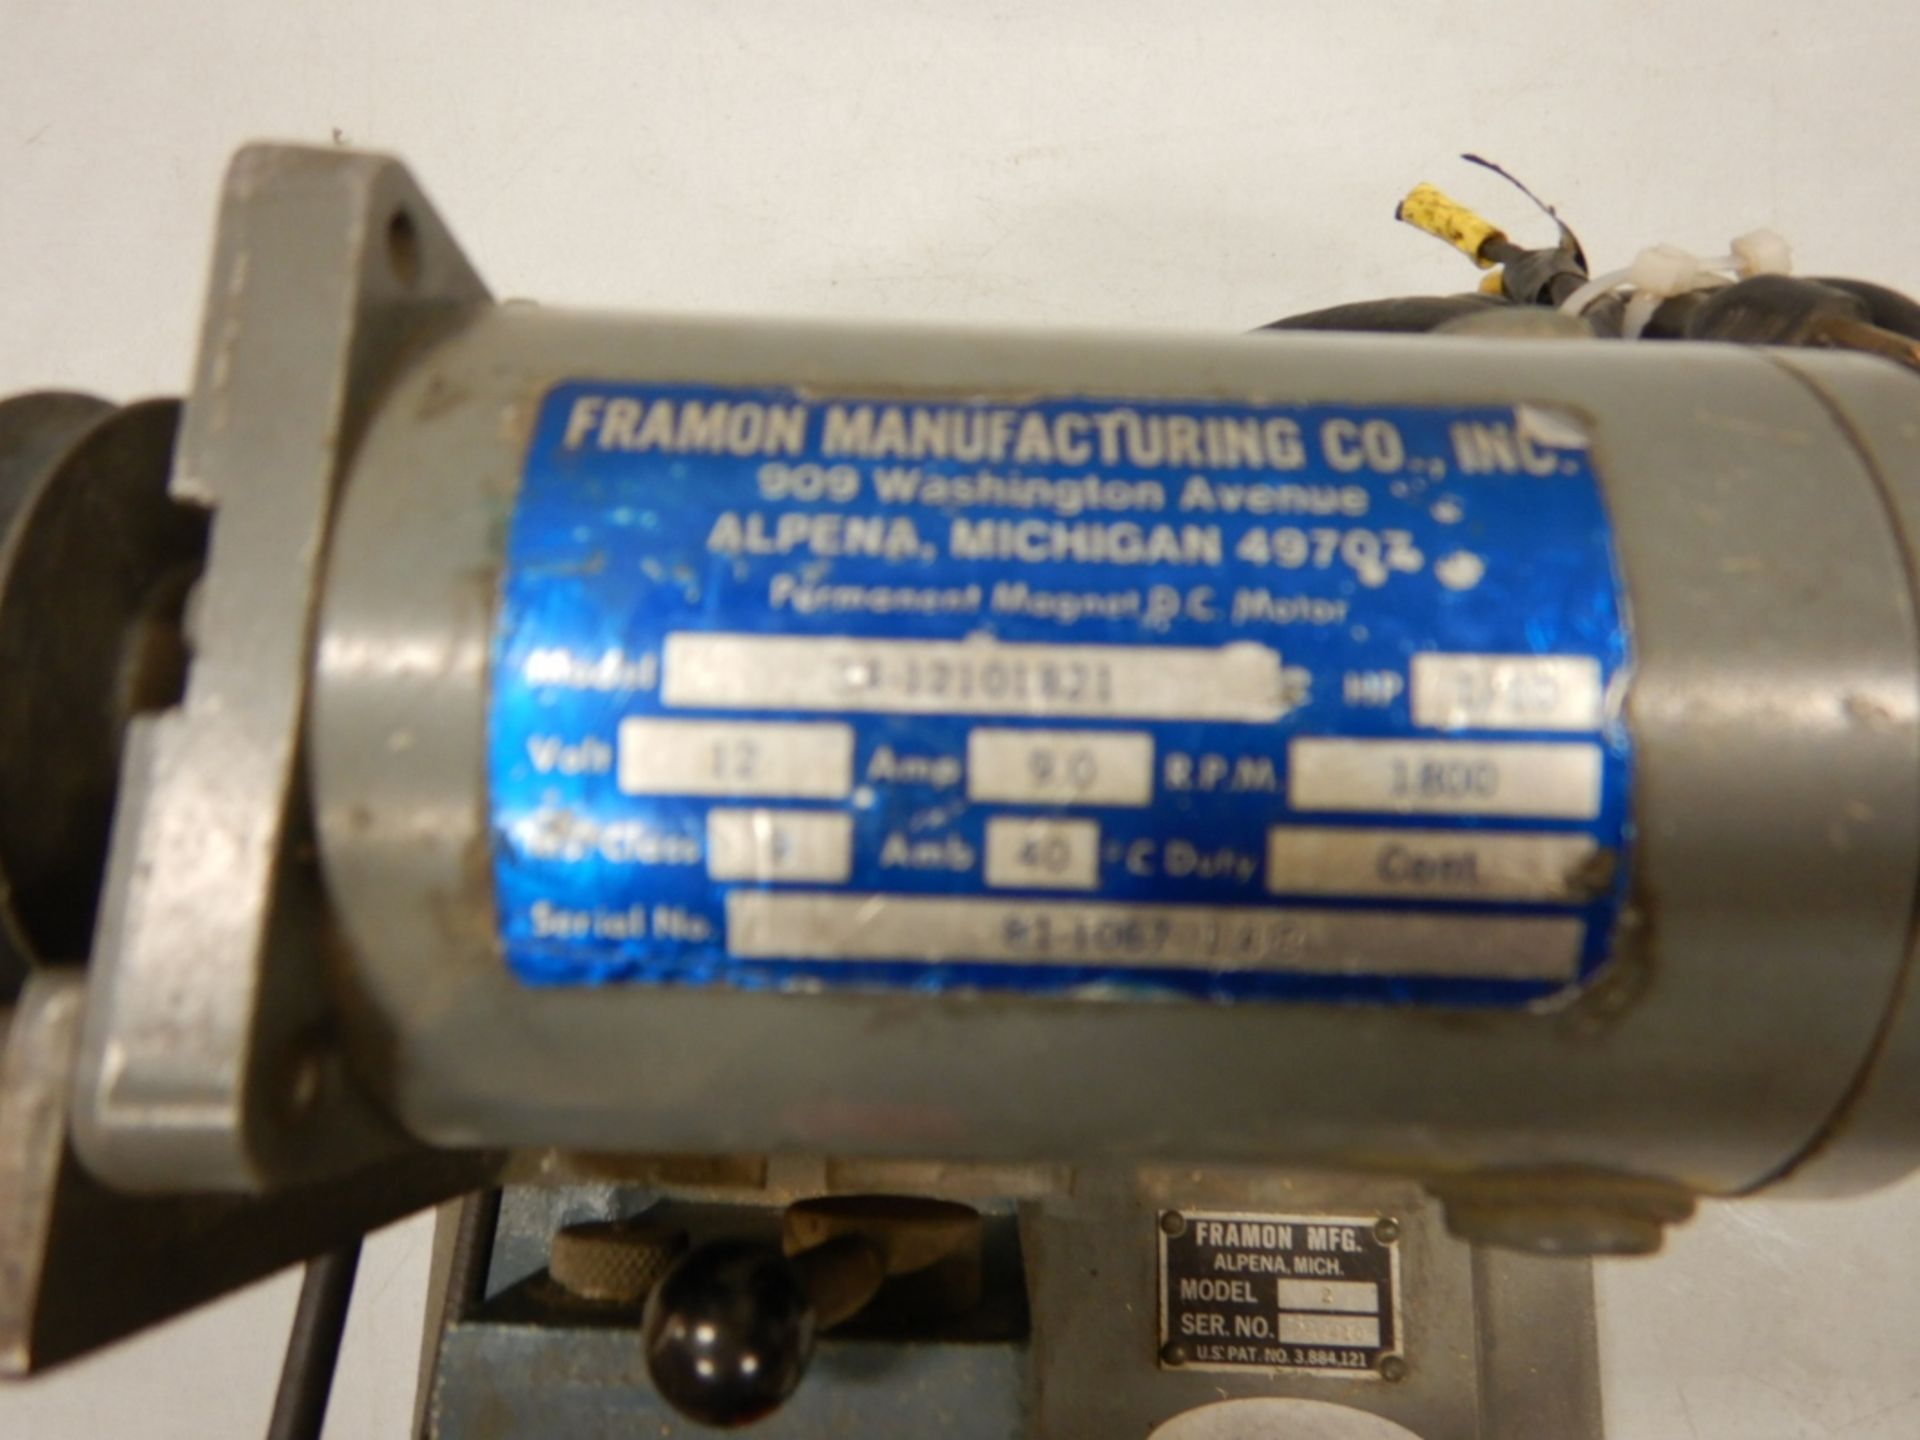 FRAMON MFG. KEY CUTTING MACHINE MOD. 34-12101821 S/N 81-1067-148 12V AND 110V MOTORS - Image 4 of 4